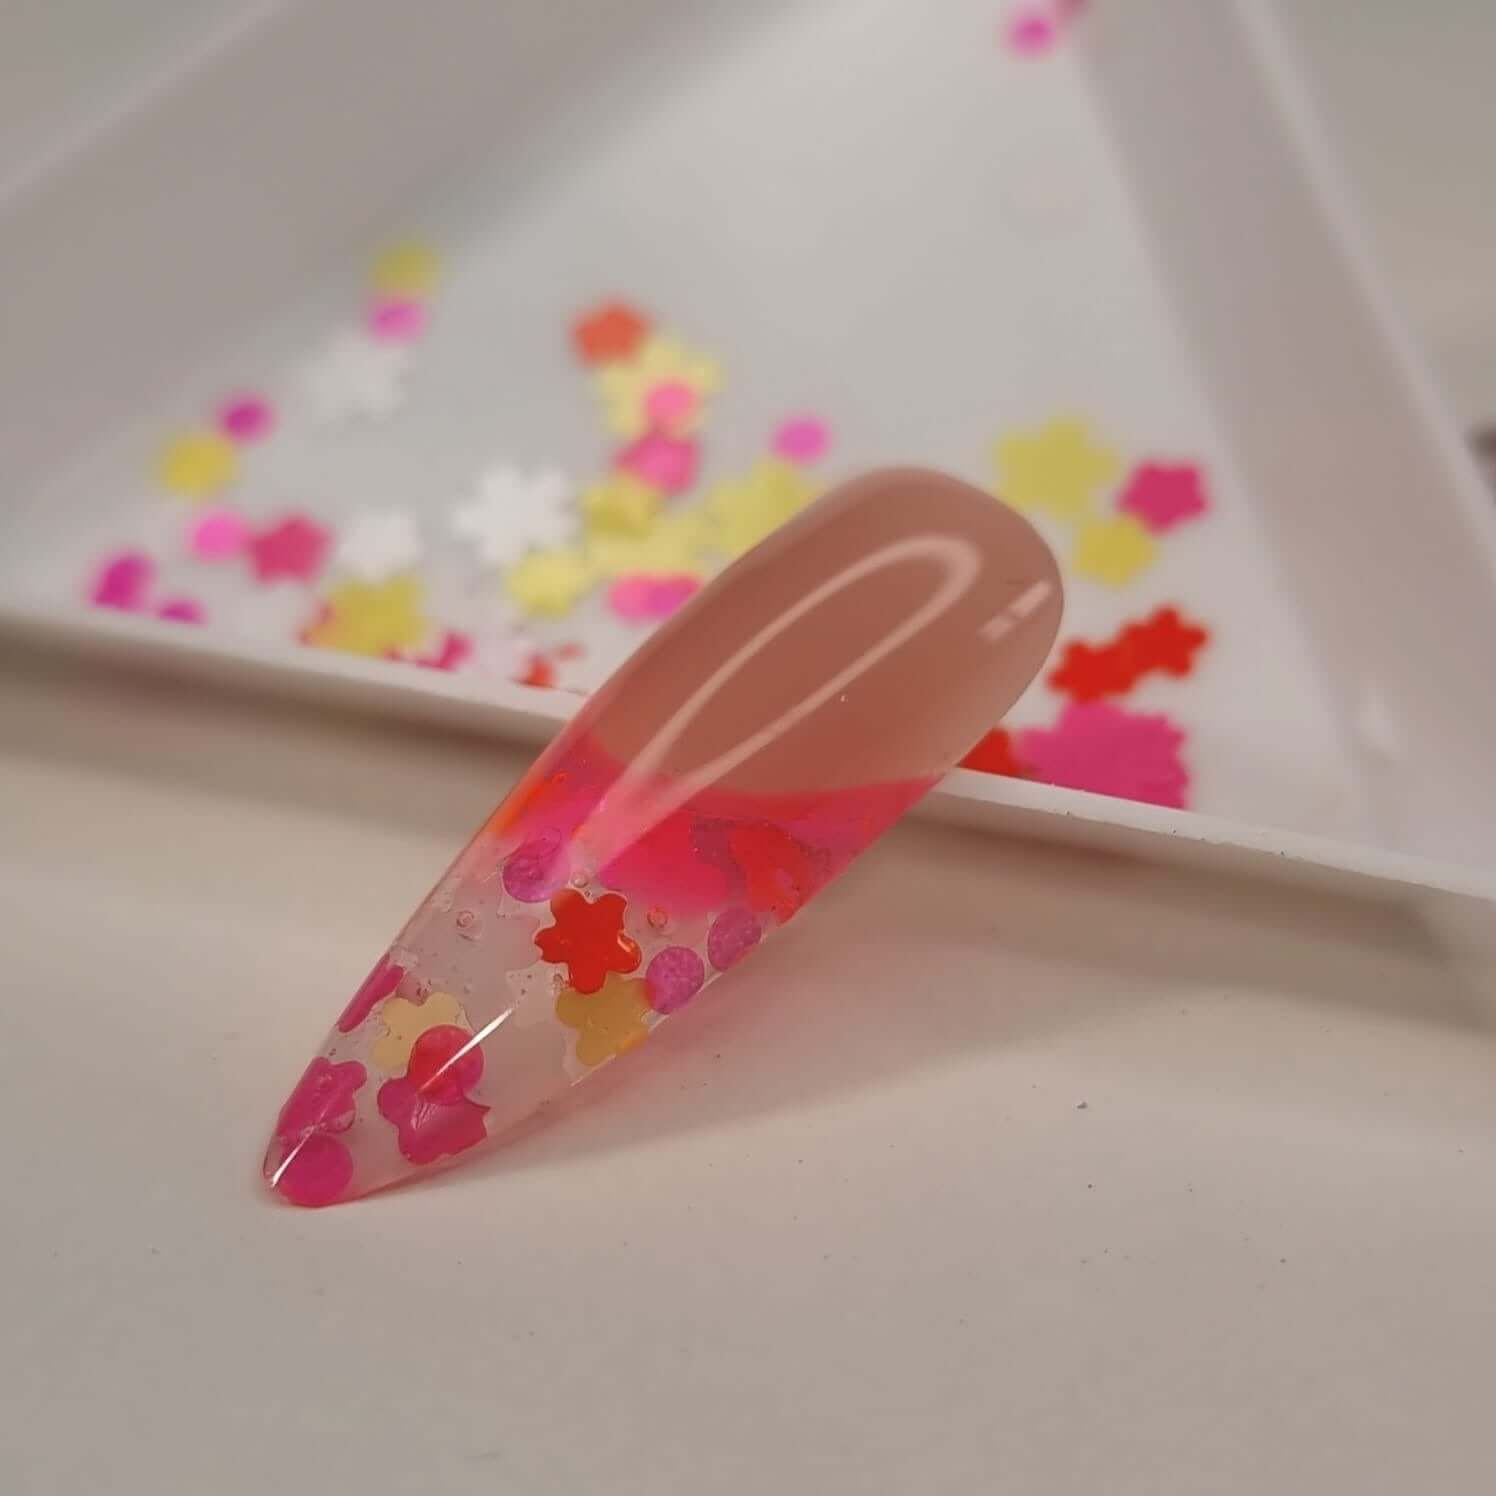 Sakura Flower Confetti